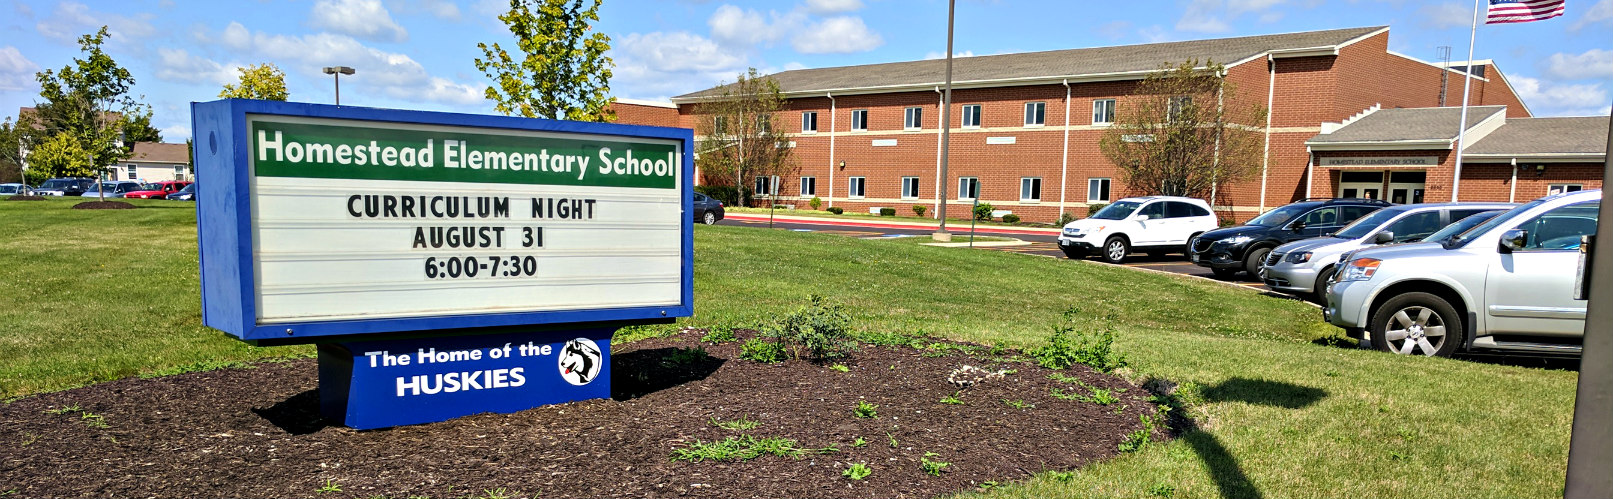 Homestead Elementary School